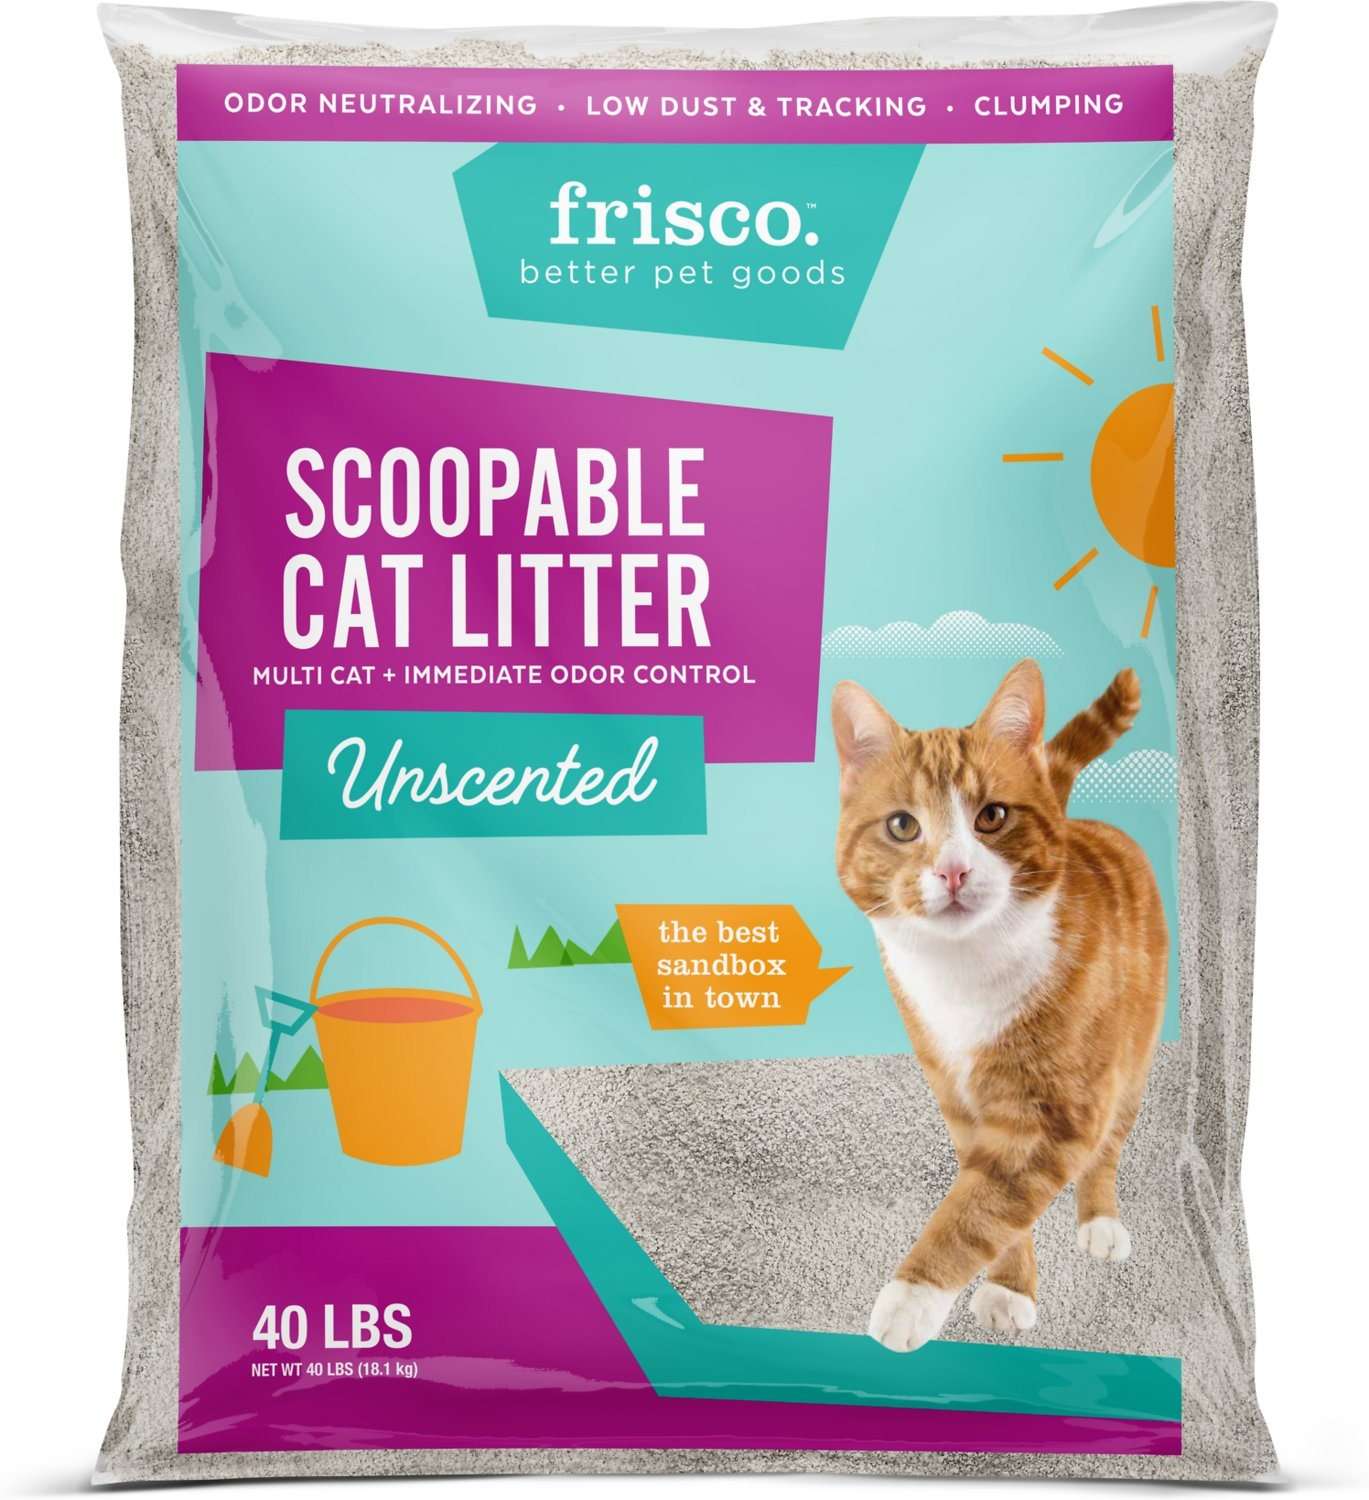 The Best Cat Litter Brands of 2018